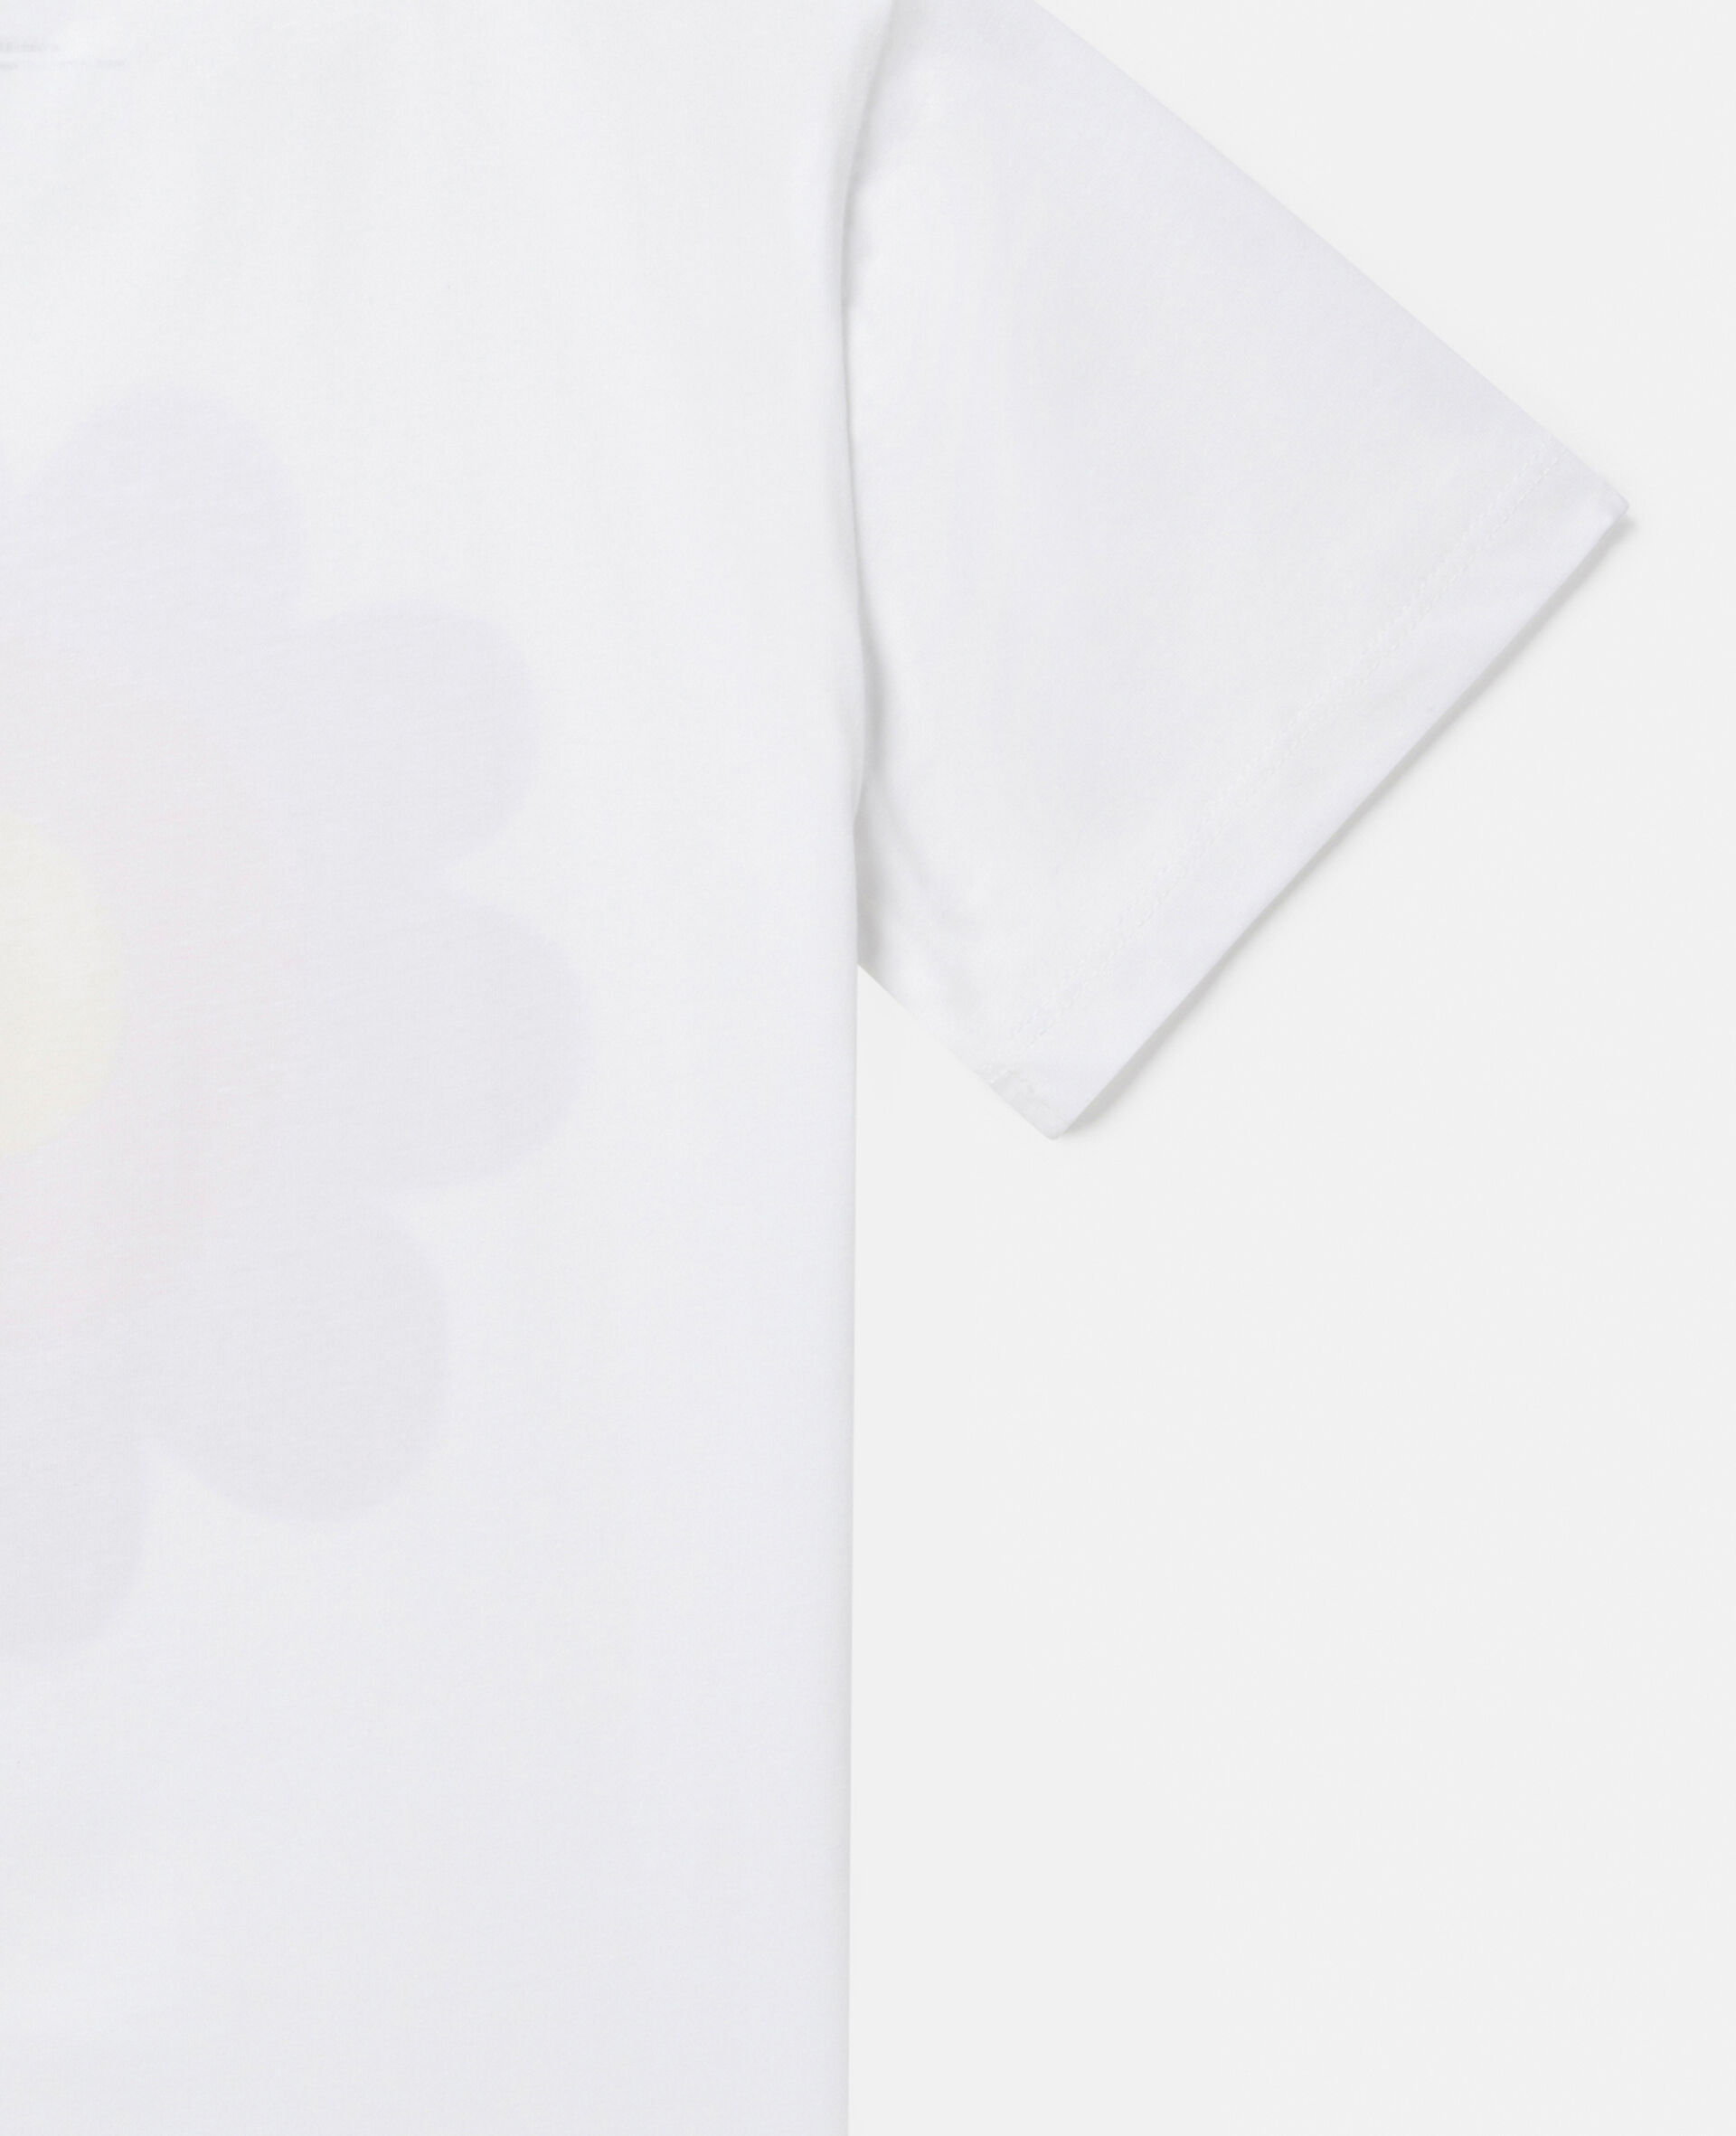 Stella Logo Graphic Flower T-Shirt-White-large image number 3